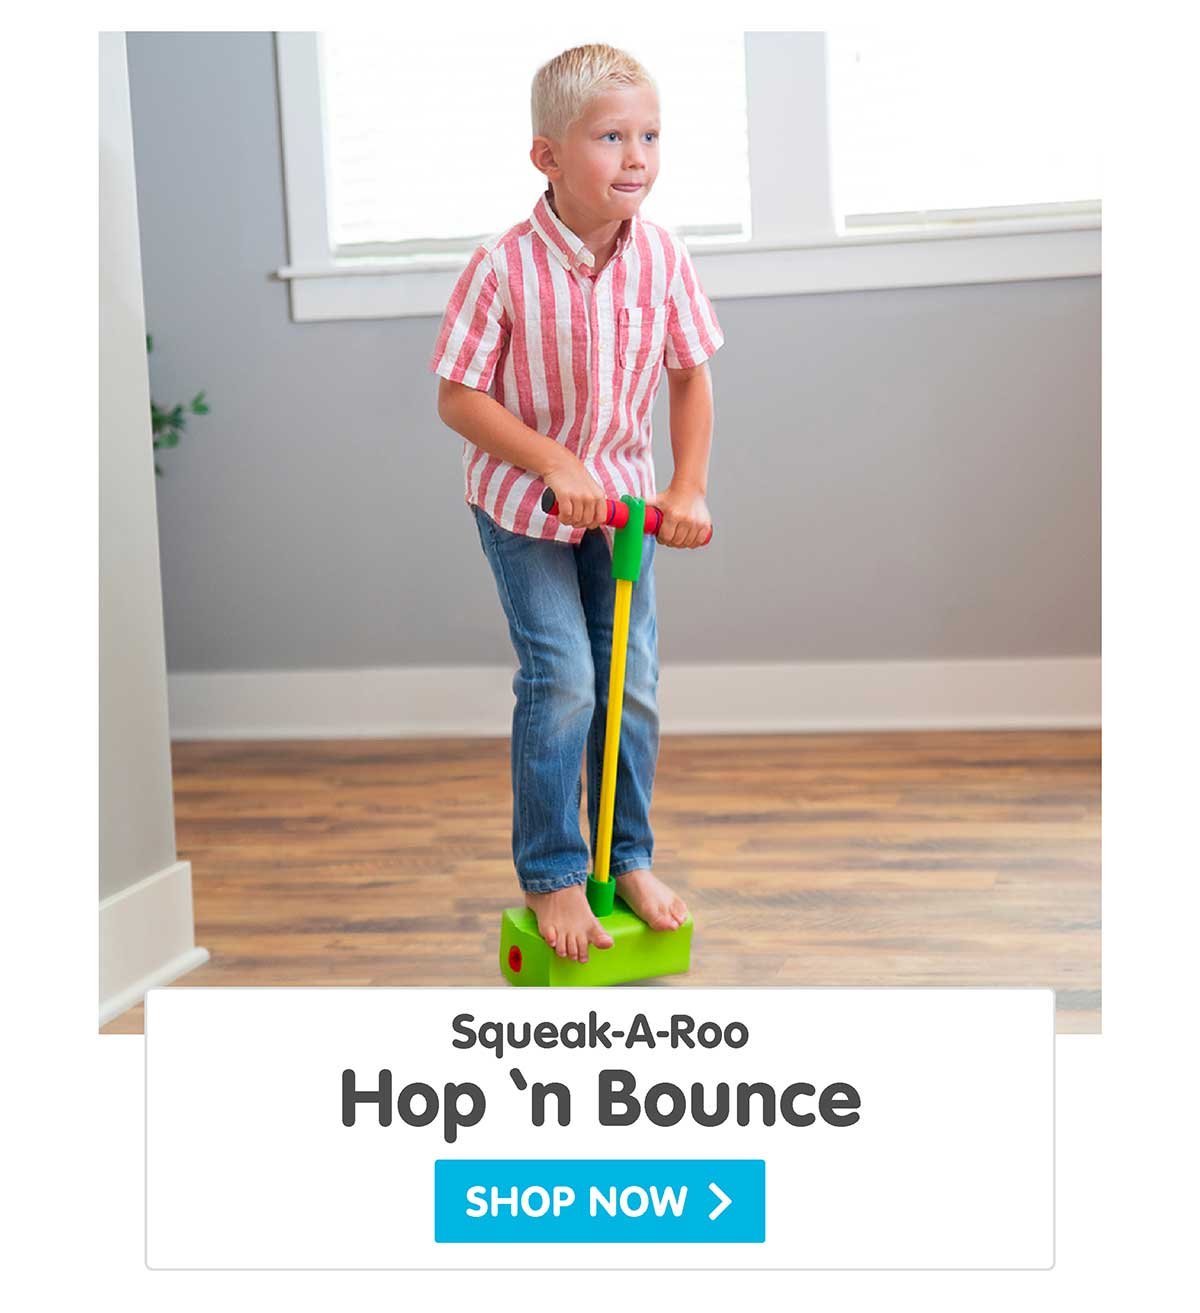 Squeak-A-Roo Hop ’n Bounce